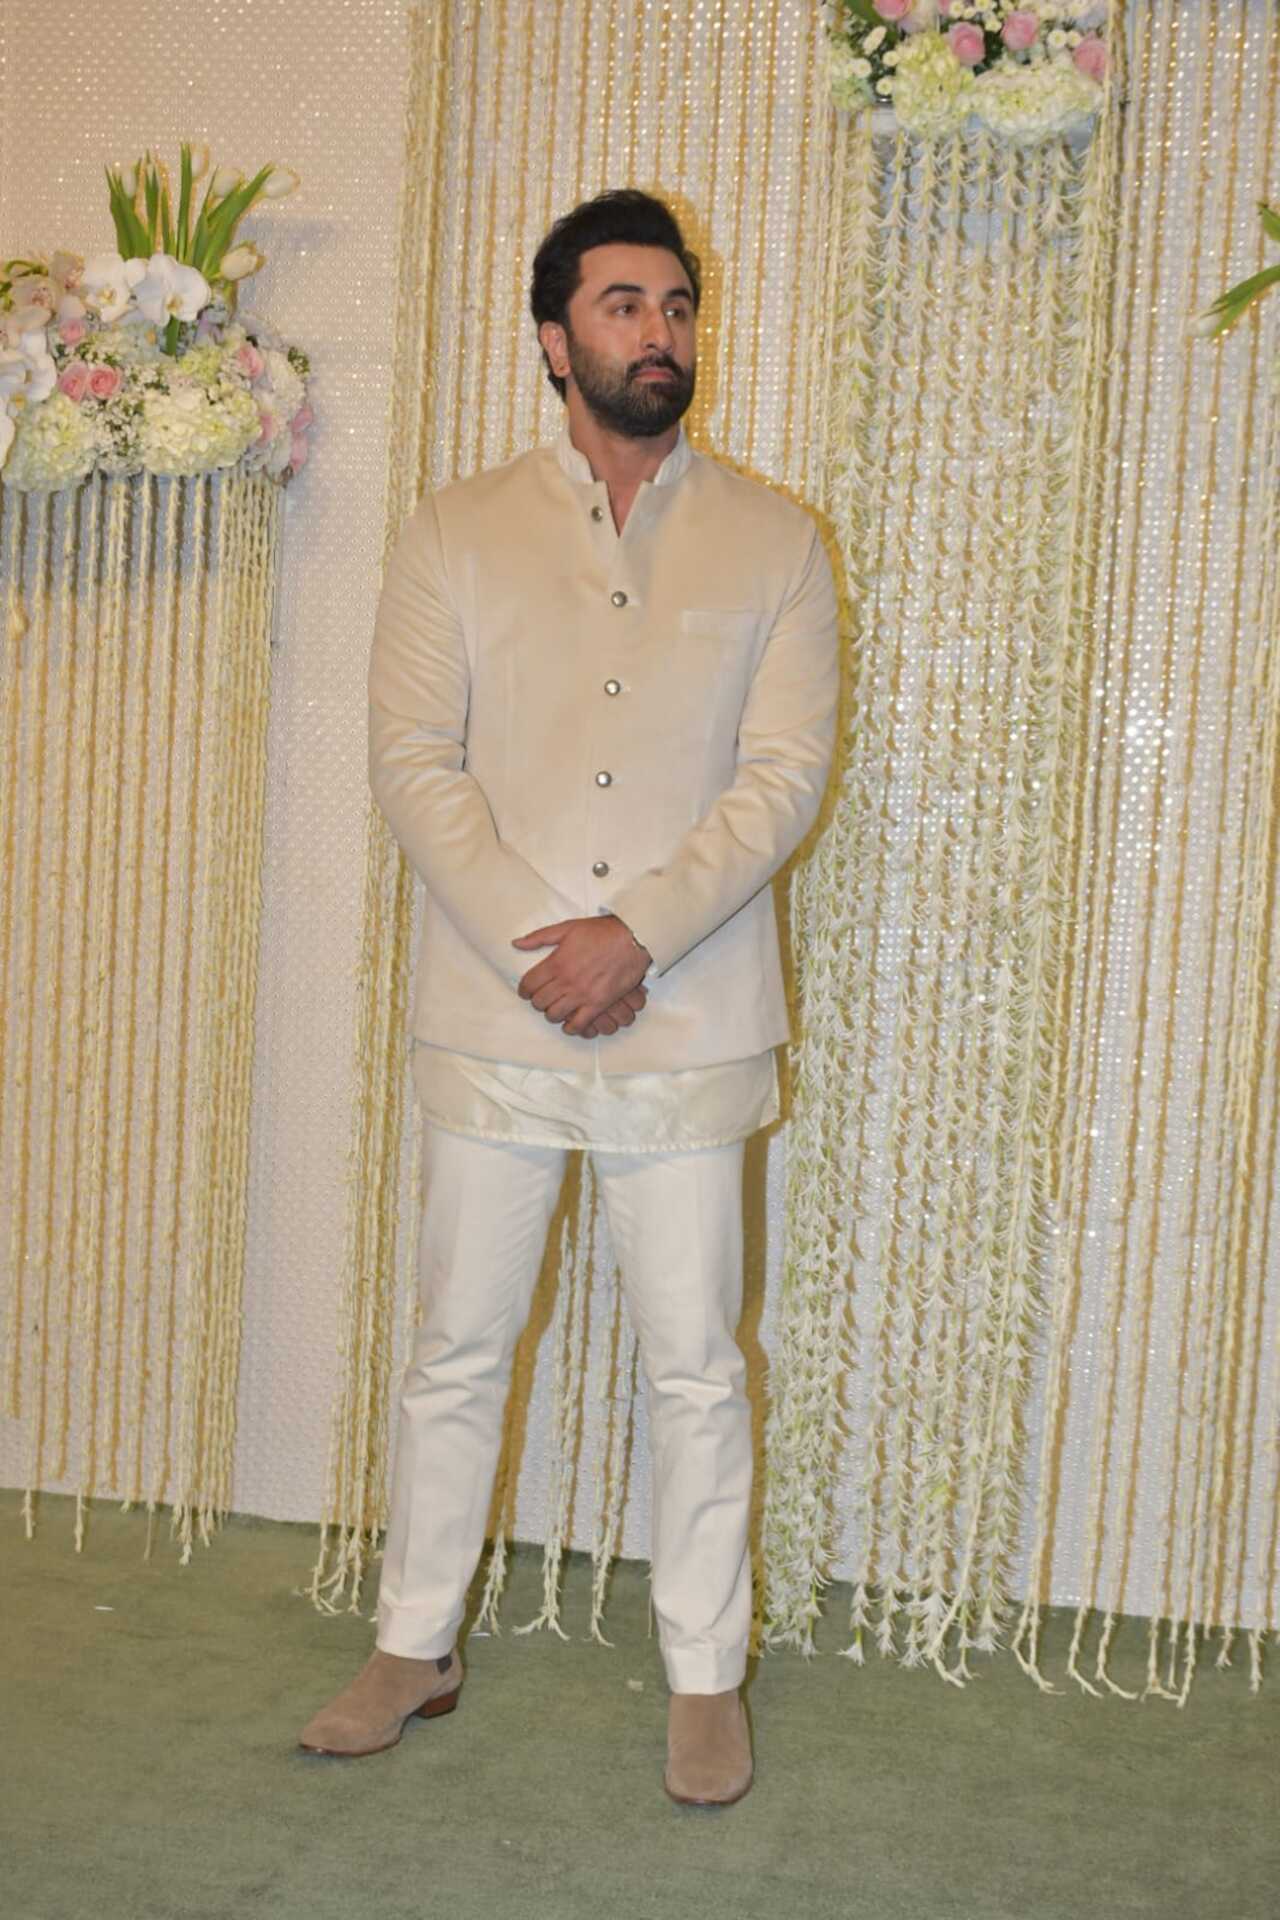 Ranbir Kapoor looked smart in an off-white kurta pajama suit